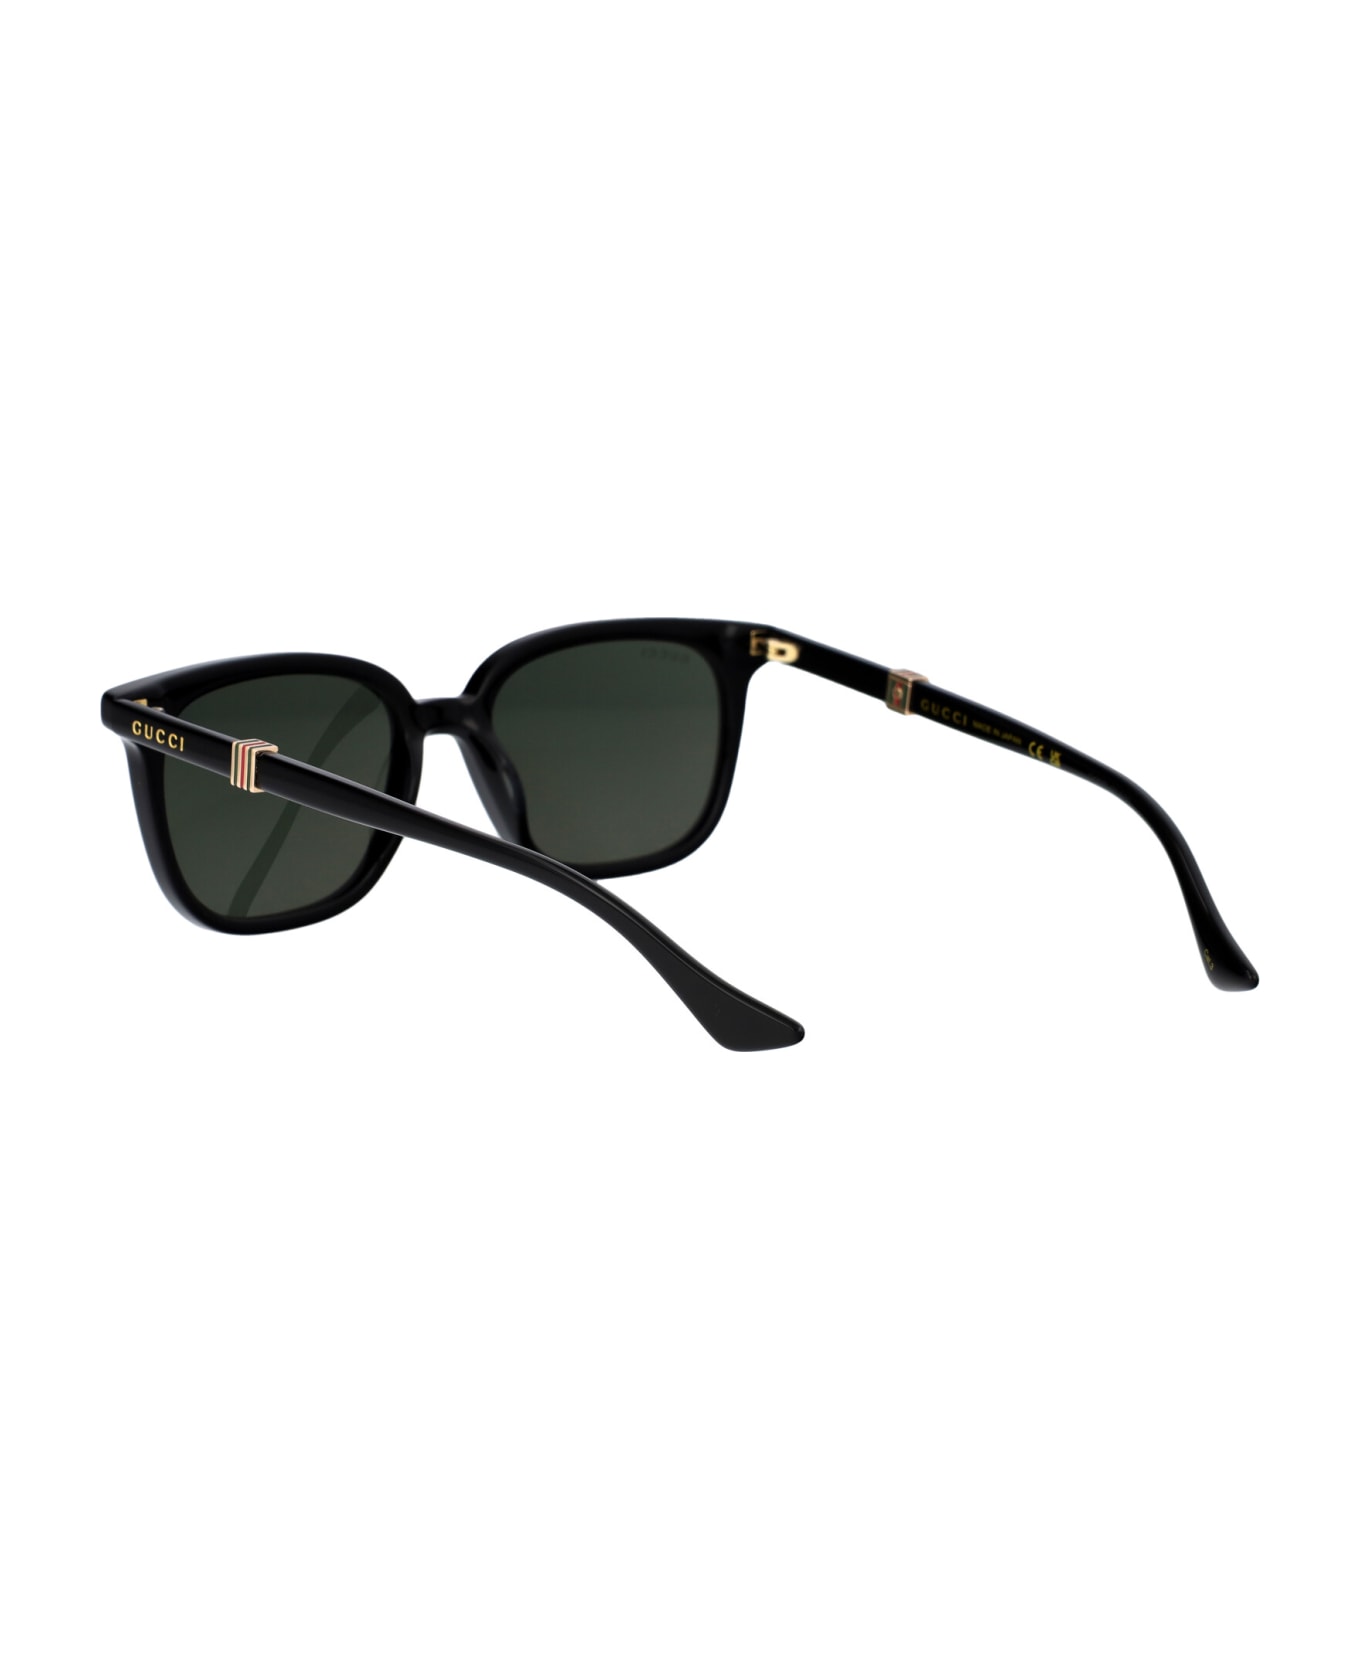 Gucci Eyewear Gg1493s Sunglasses - 001 BLACK BLACK GREY サングラス